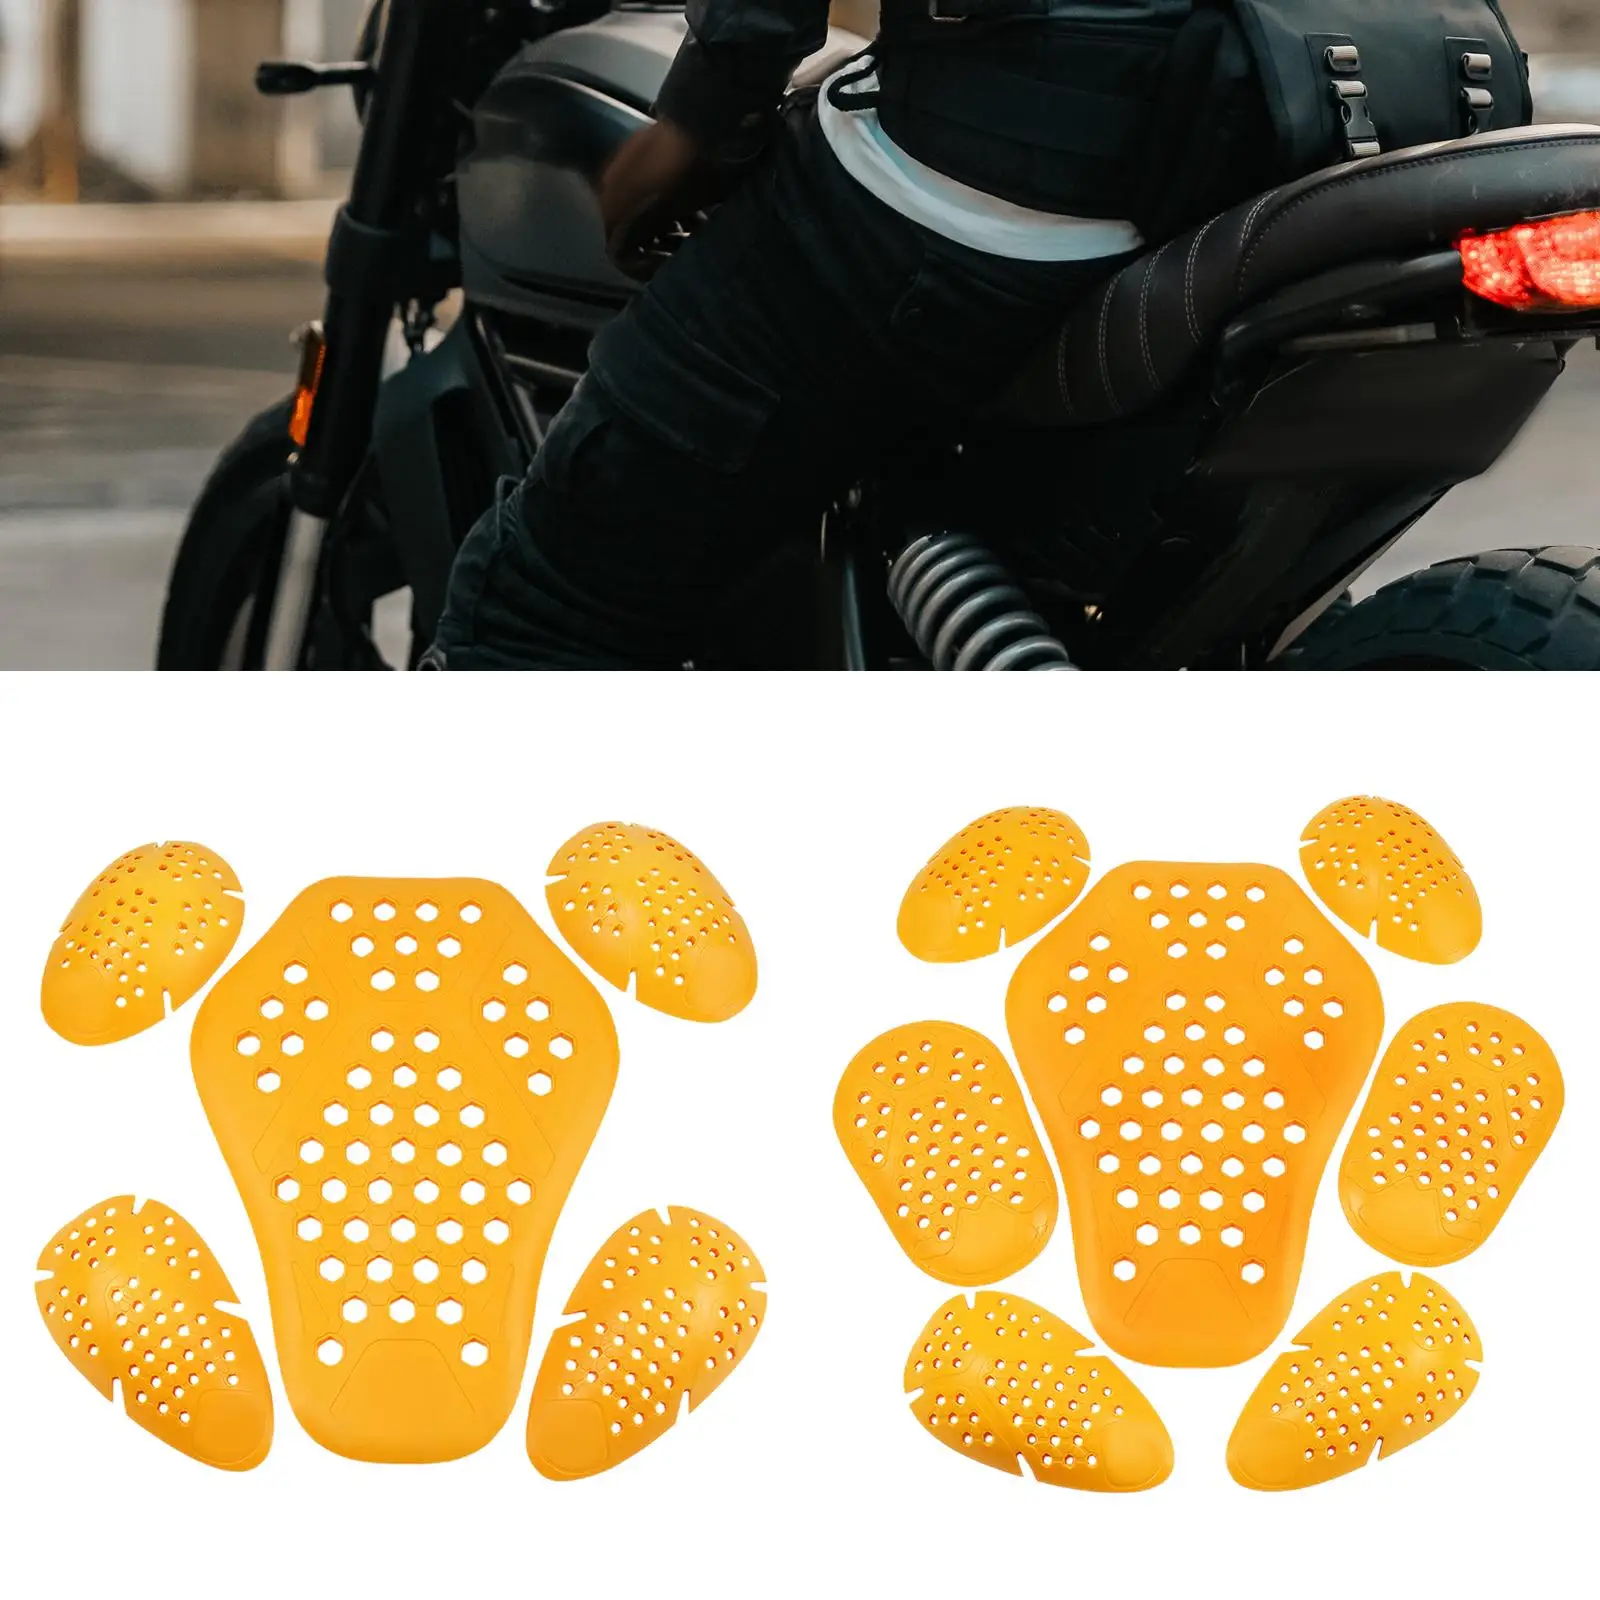 Motorcycle Jacket Armor Protective Gear Armor Pad Set Motorbike 